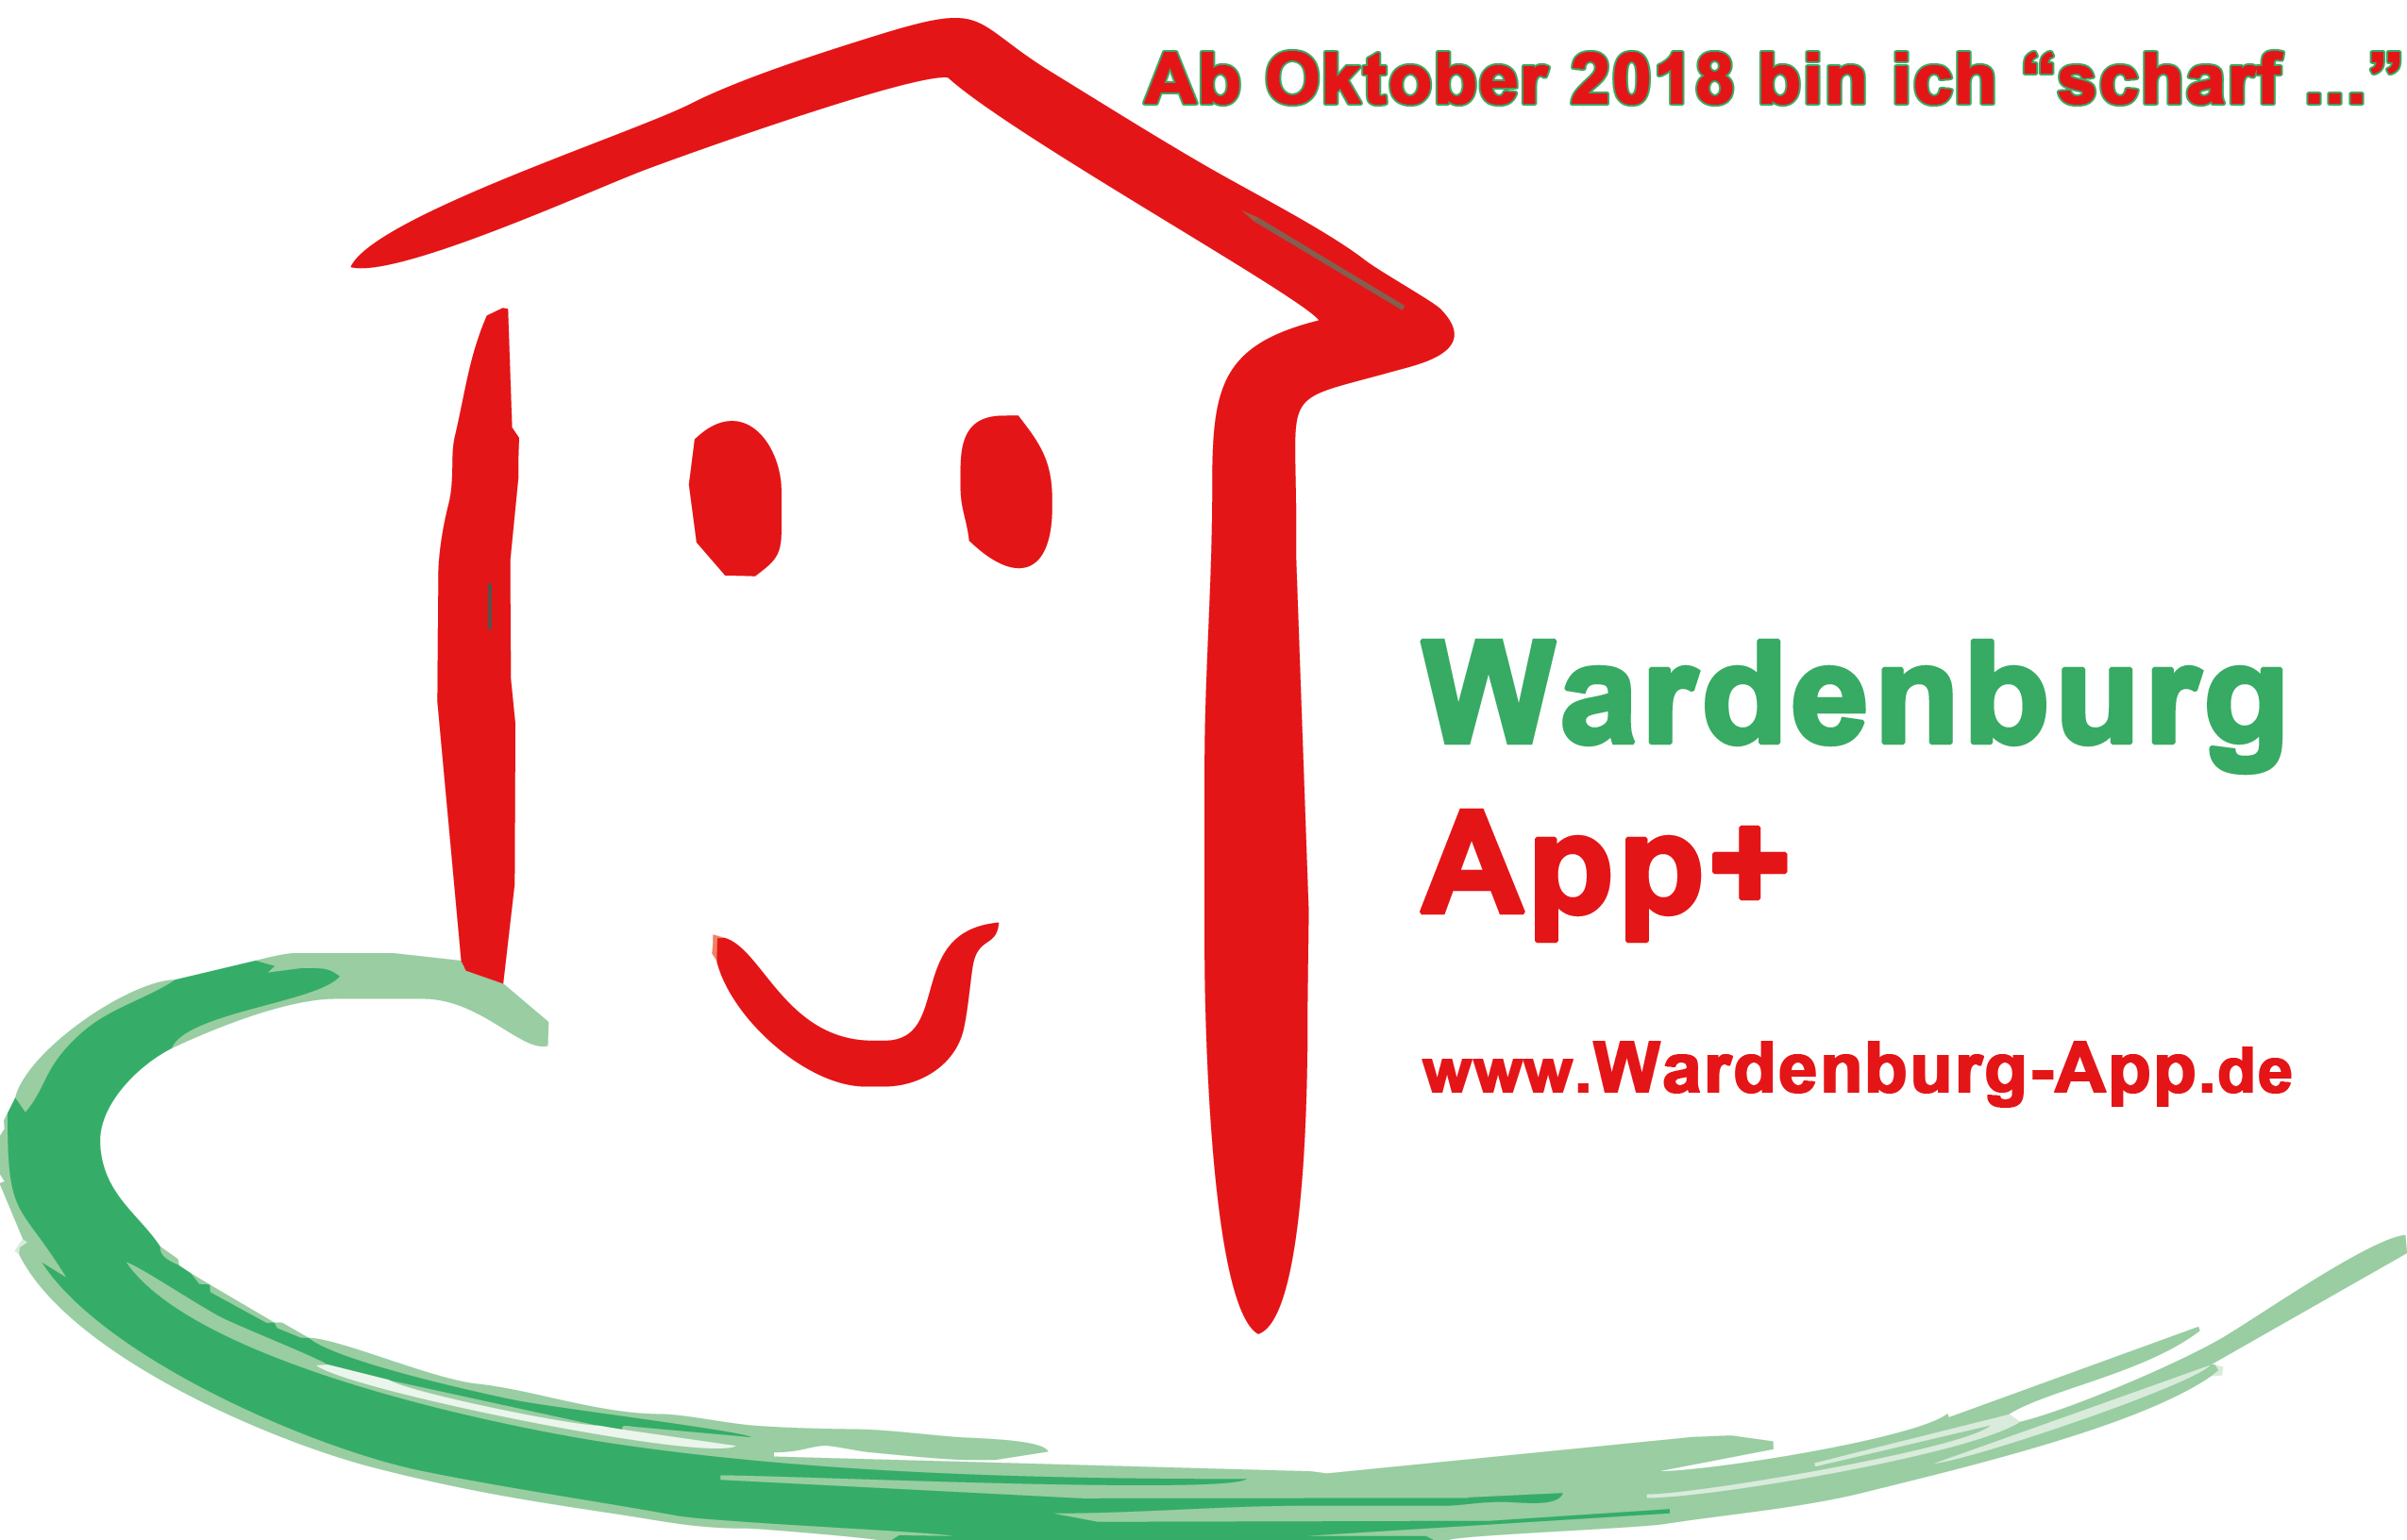 Wardenburg-App+ Scharf ab Oktober 2018 - http://www.wardenburg-app.de